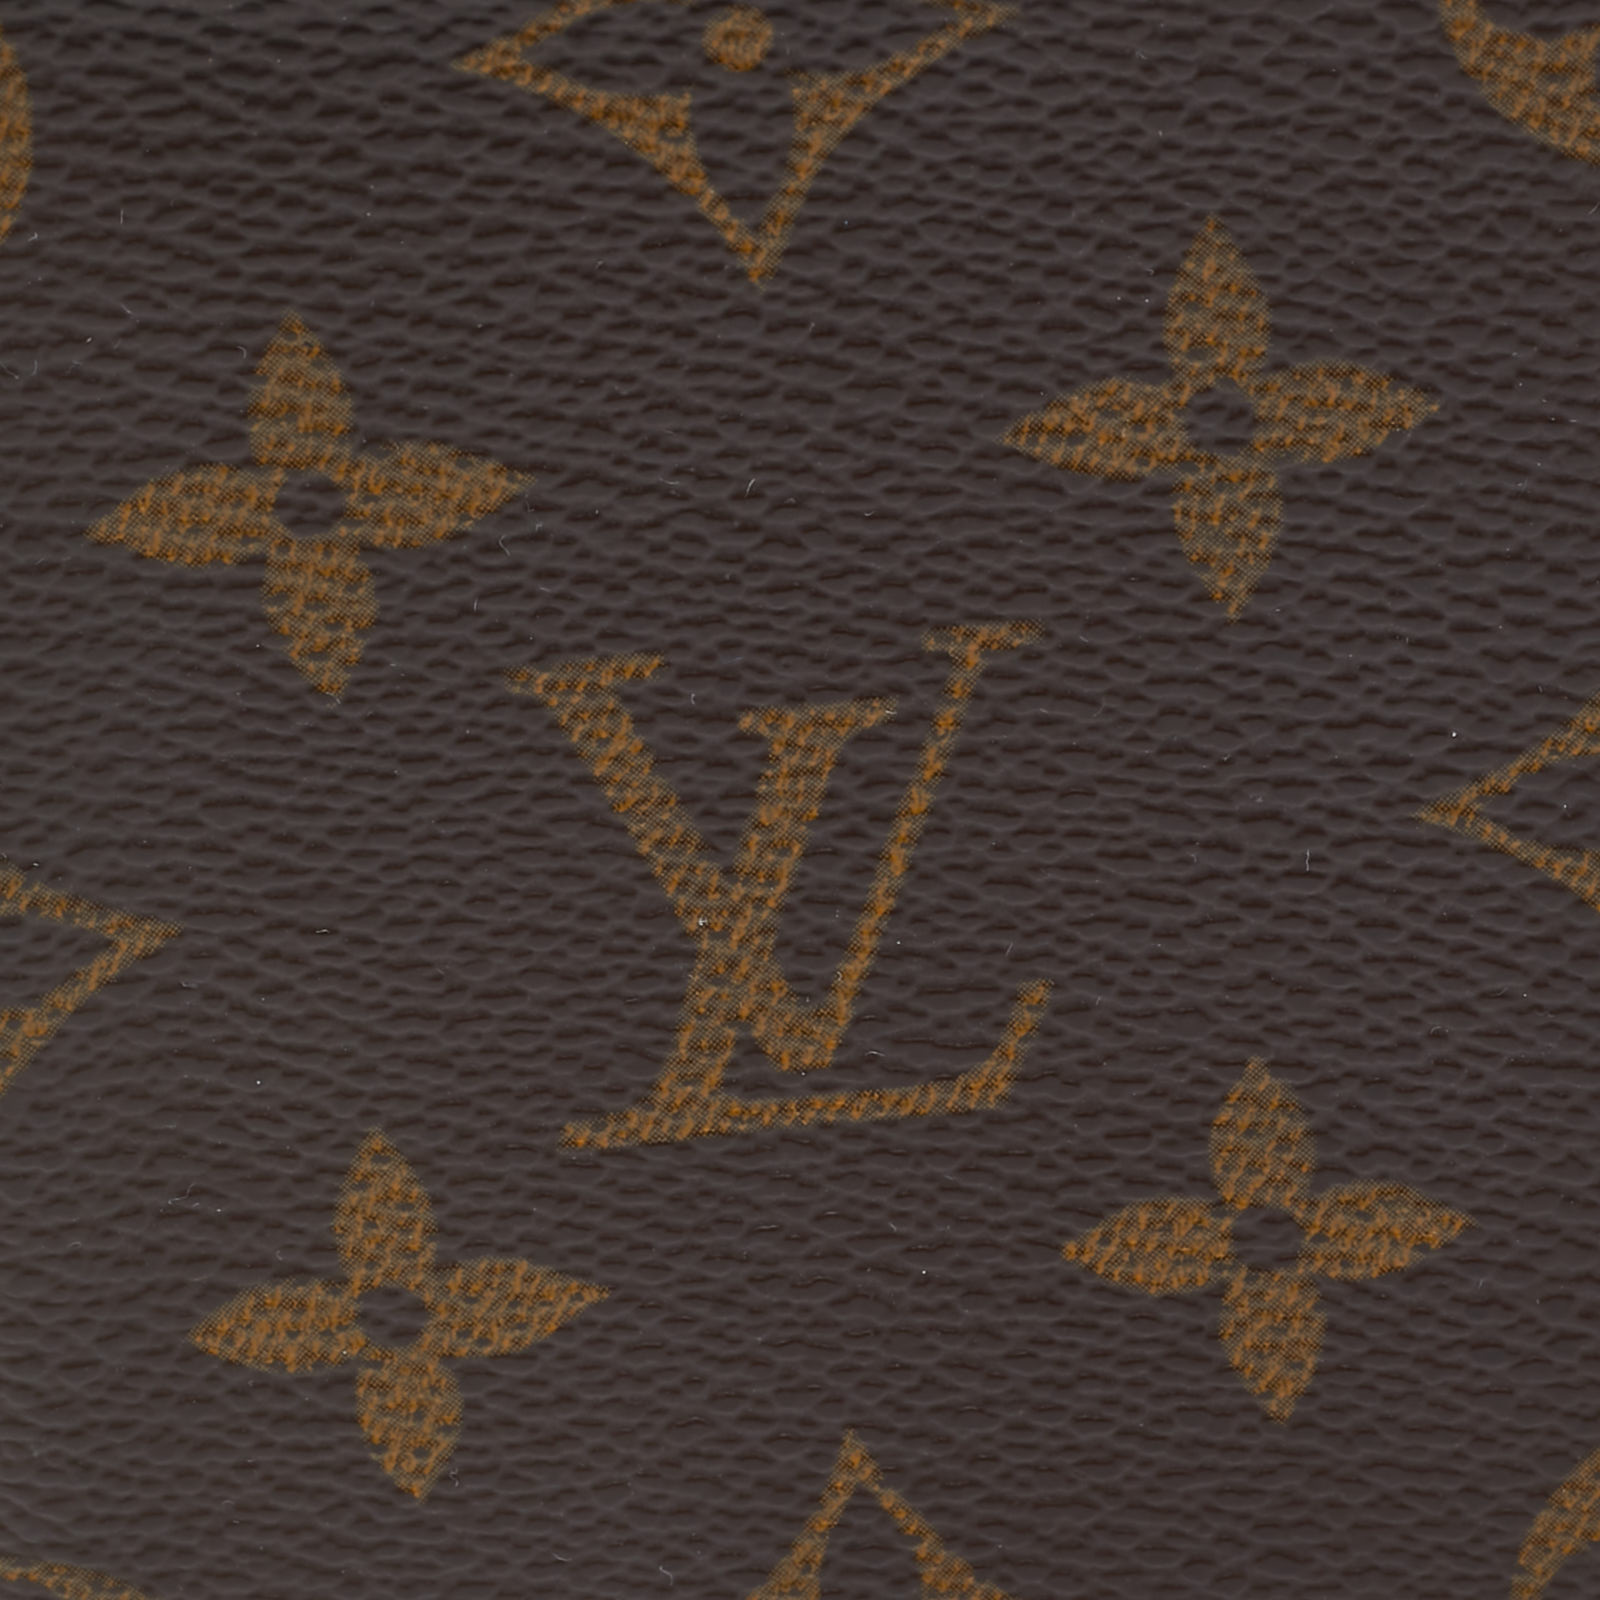 Louis Vuitton Monogram Canvas Card Holder Wallet